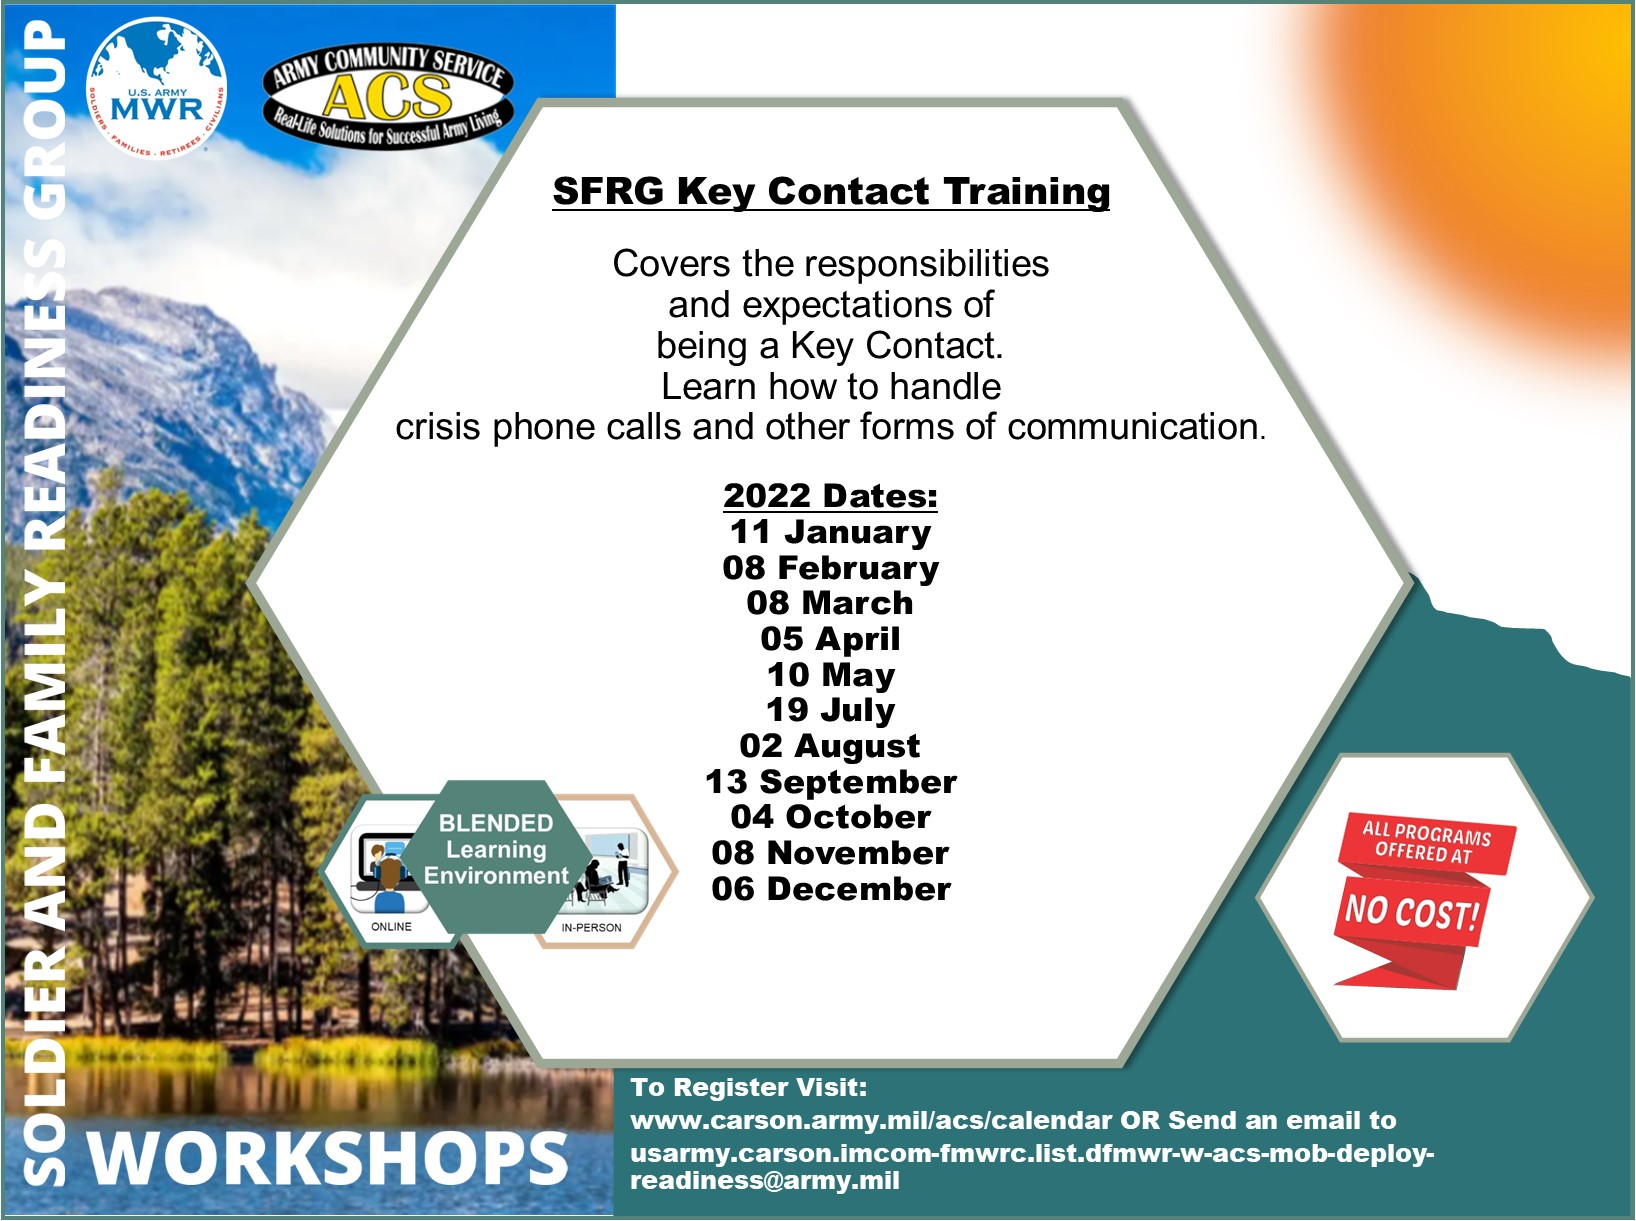 SFRG Key Contact Training